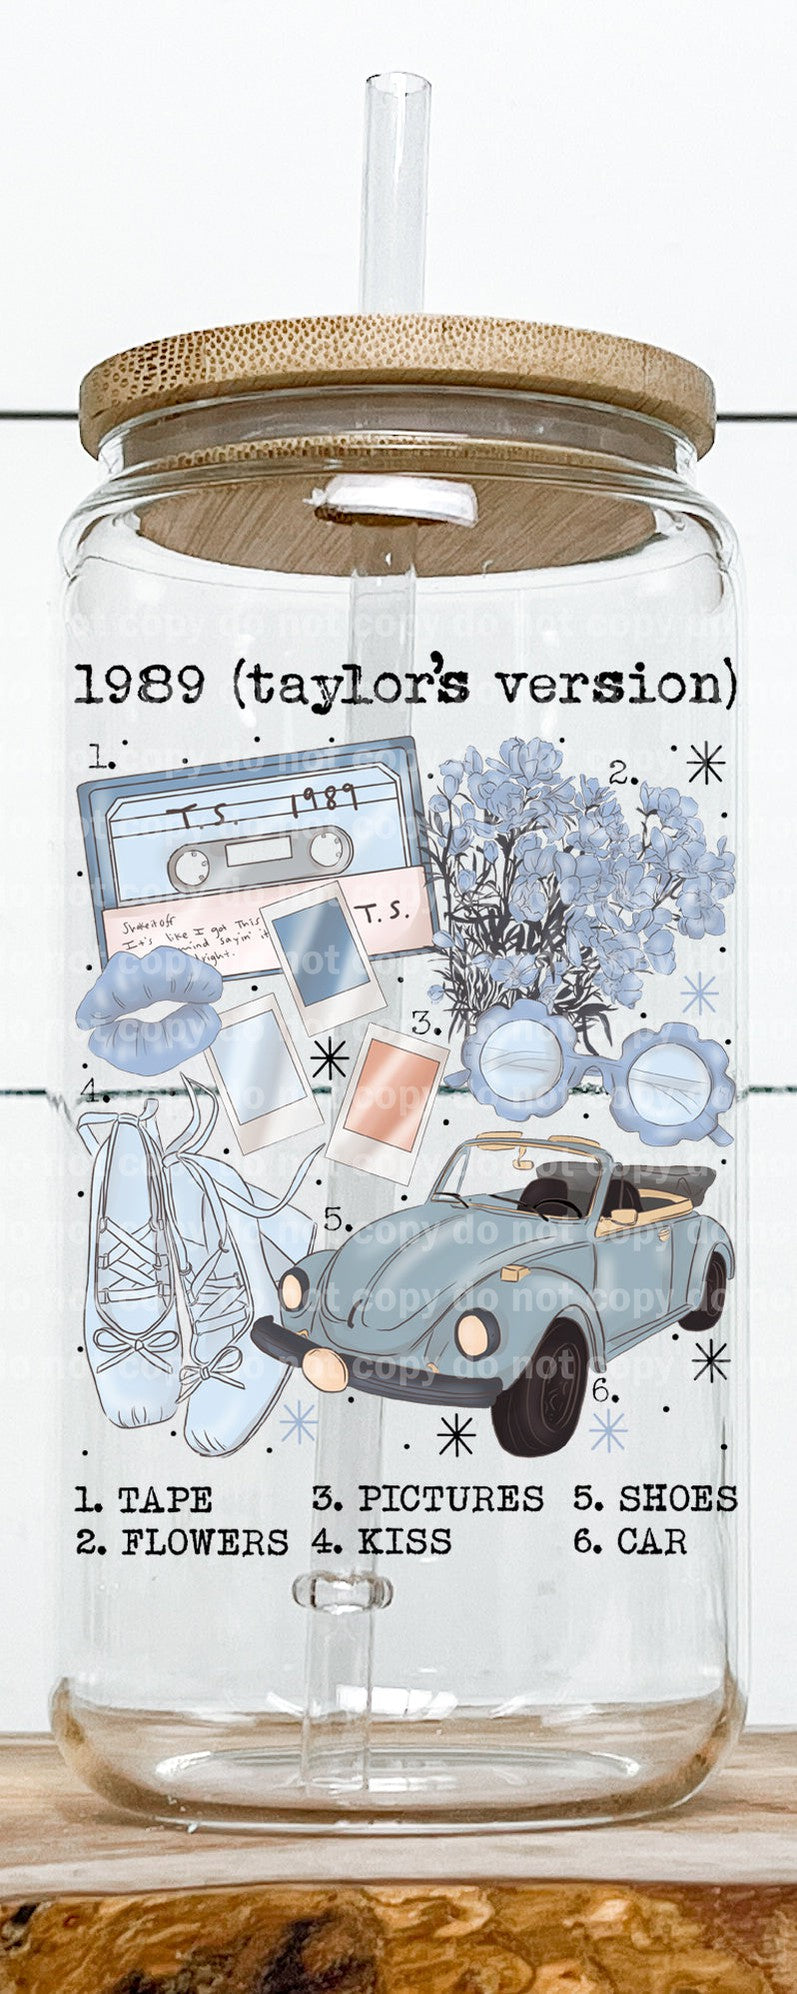 1989 Taylor's Version Chart